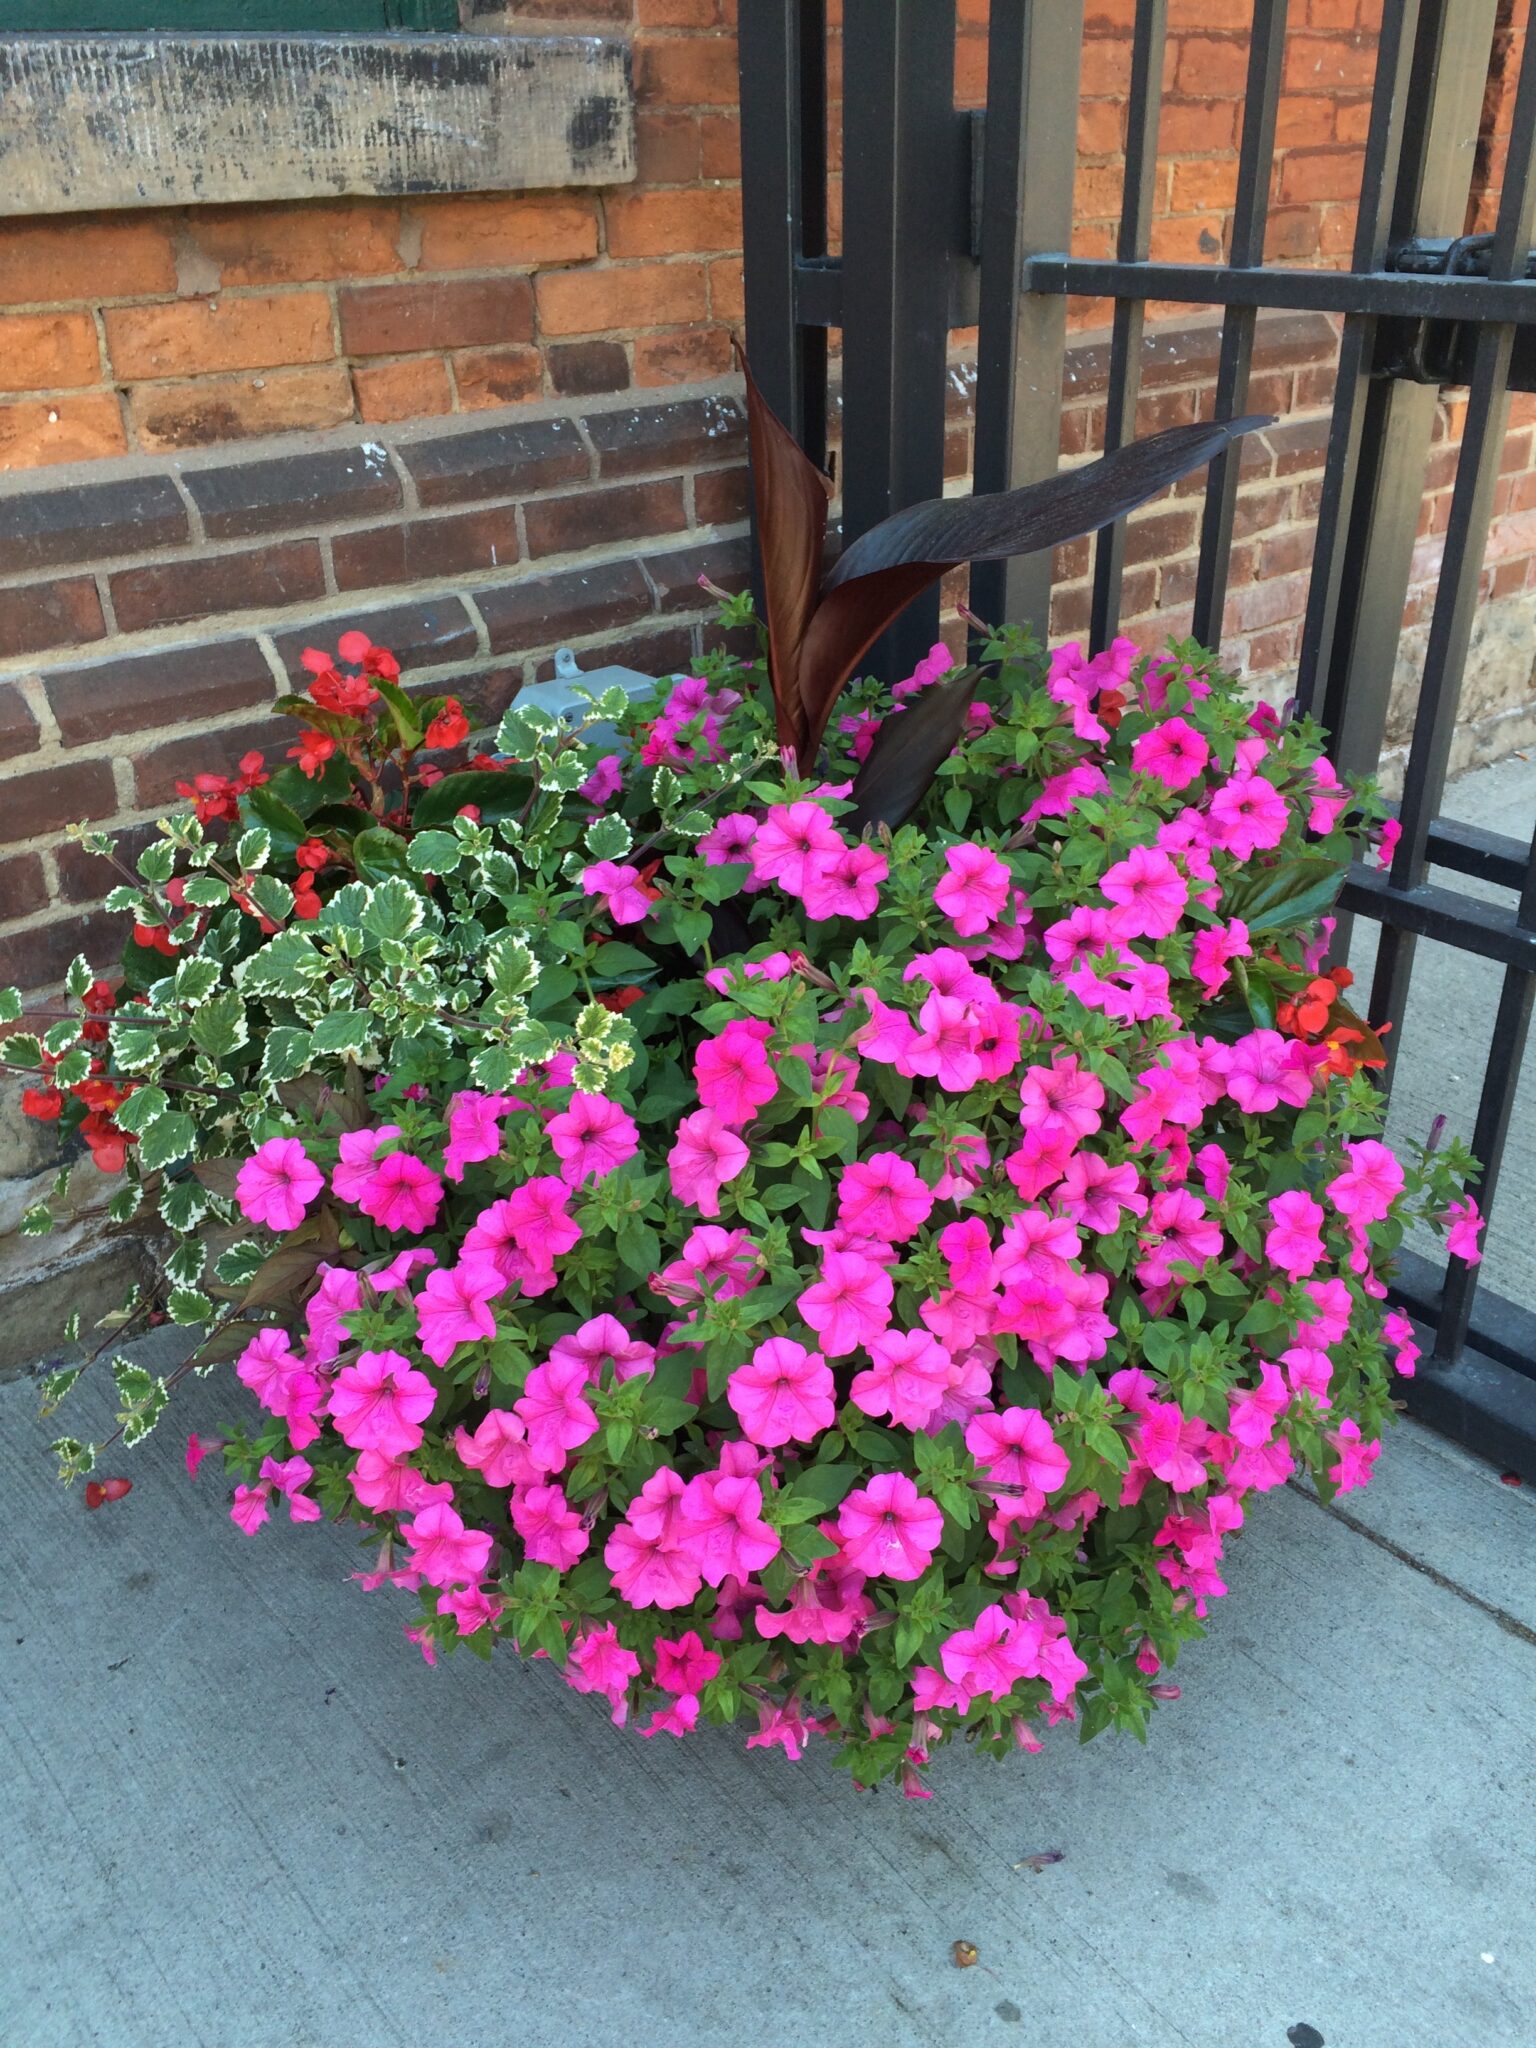 planter with beautiful bright pink petunias